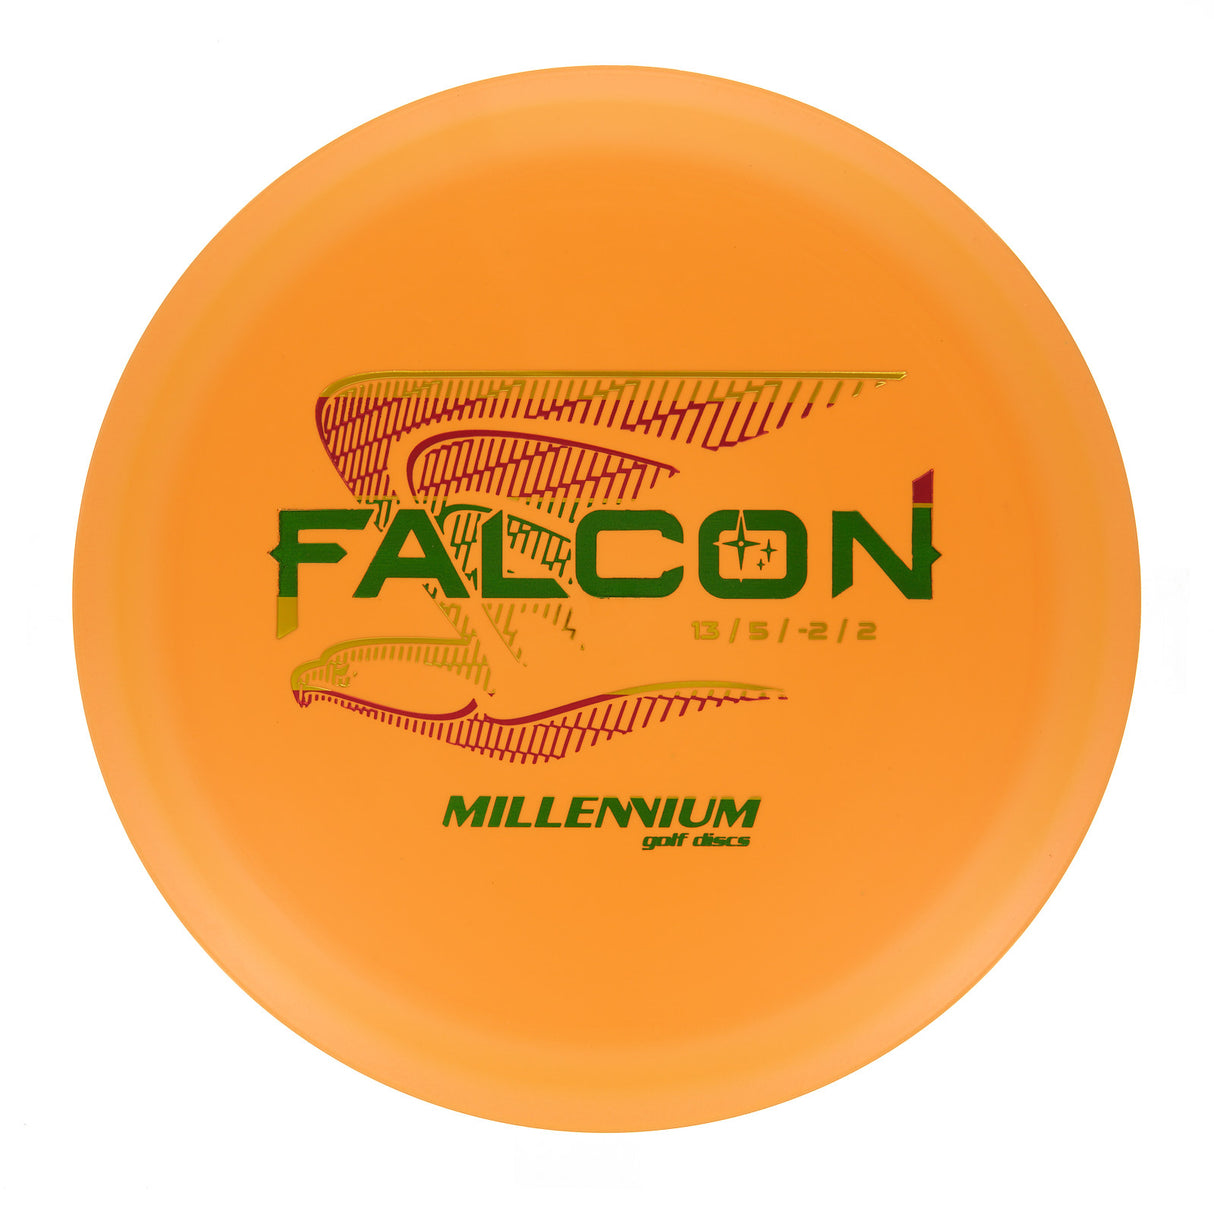 Millennium Falcon - Standard 162g | Style 0001